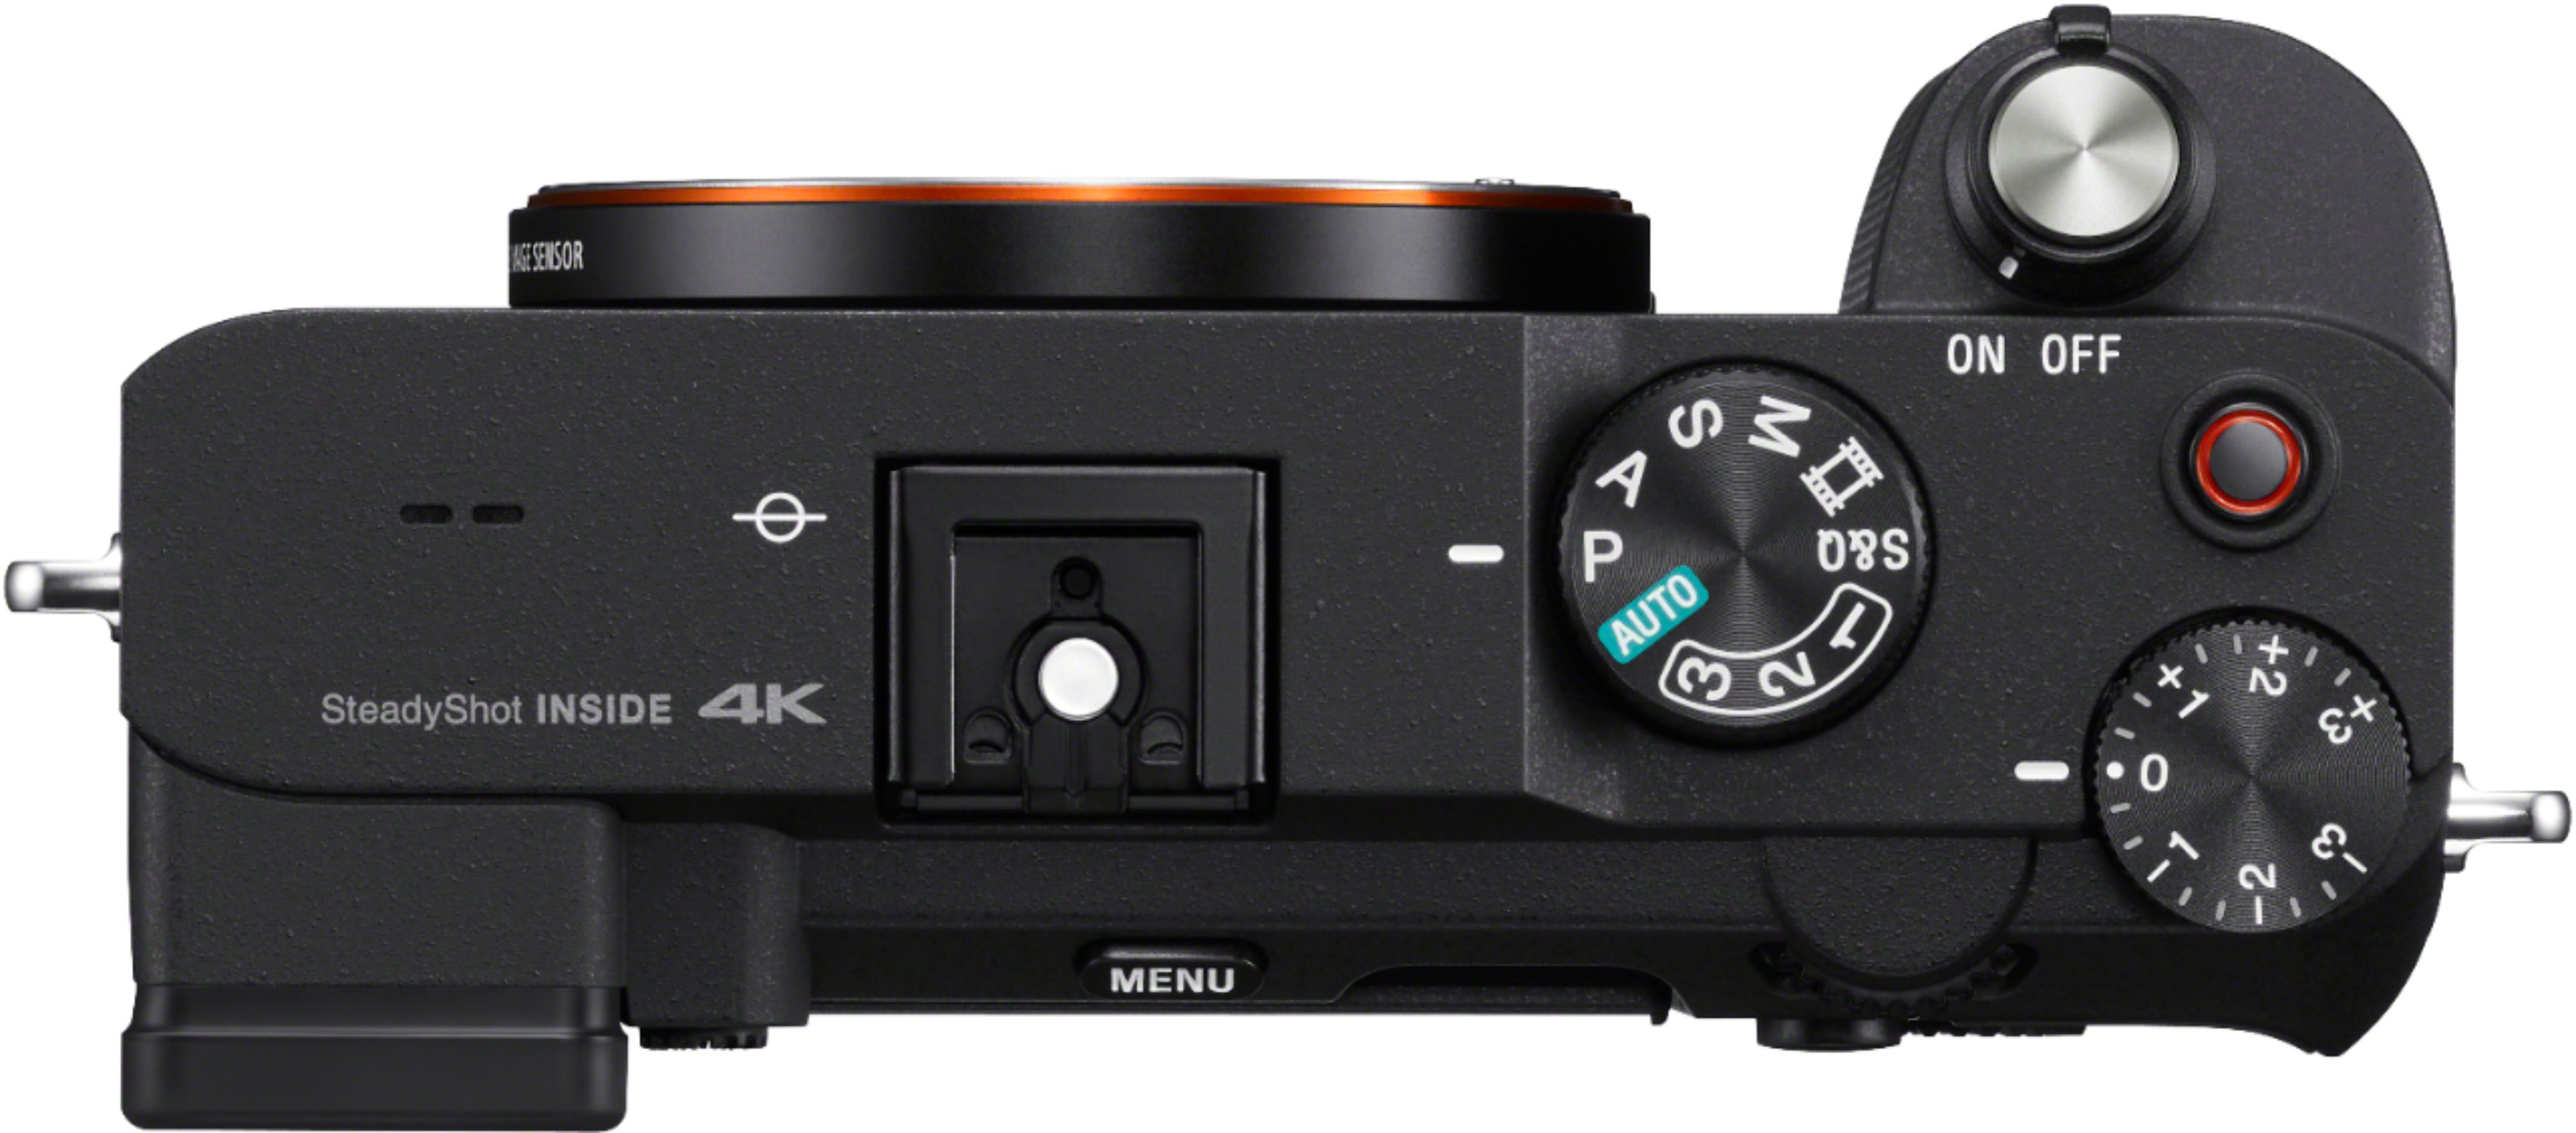 Sony Alpha 7C Full-frame Mirrorless Camera Black ILCE7C/B - Best Buy